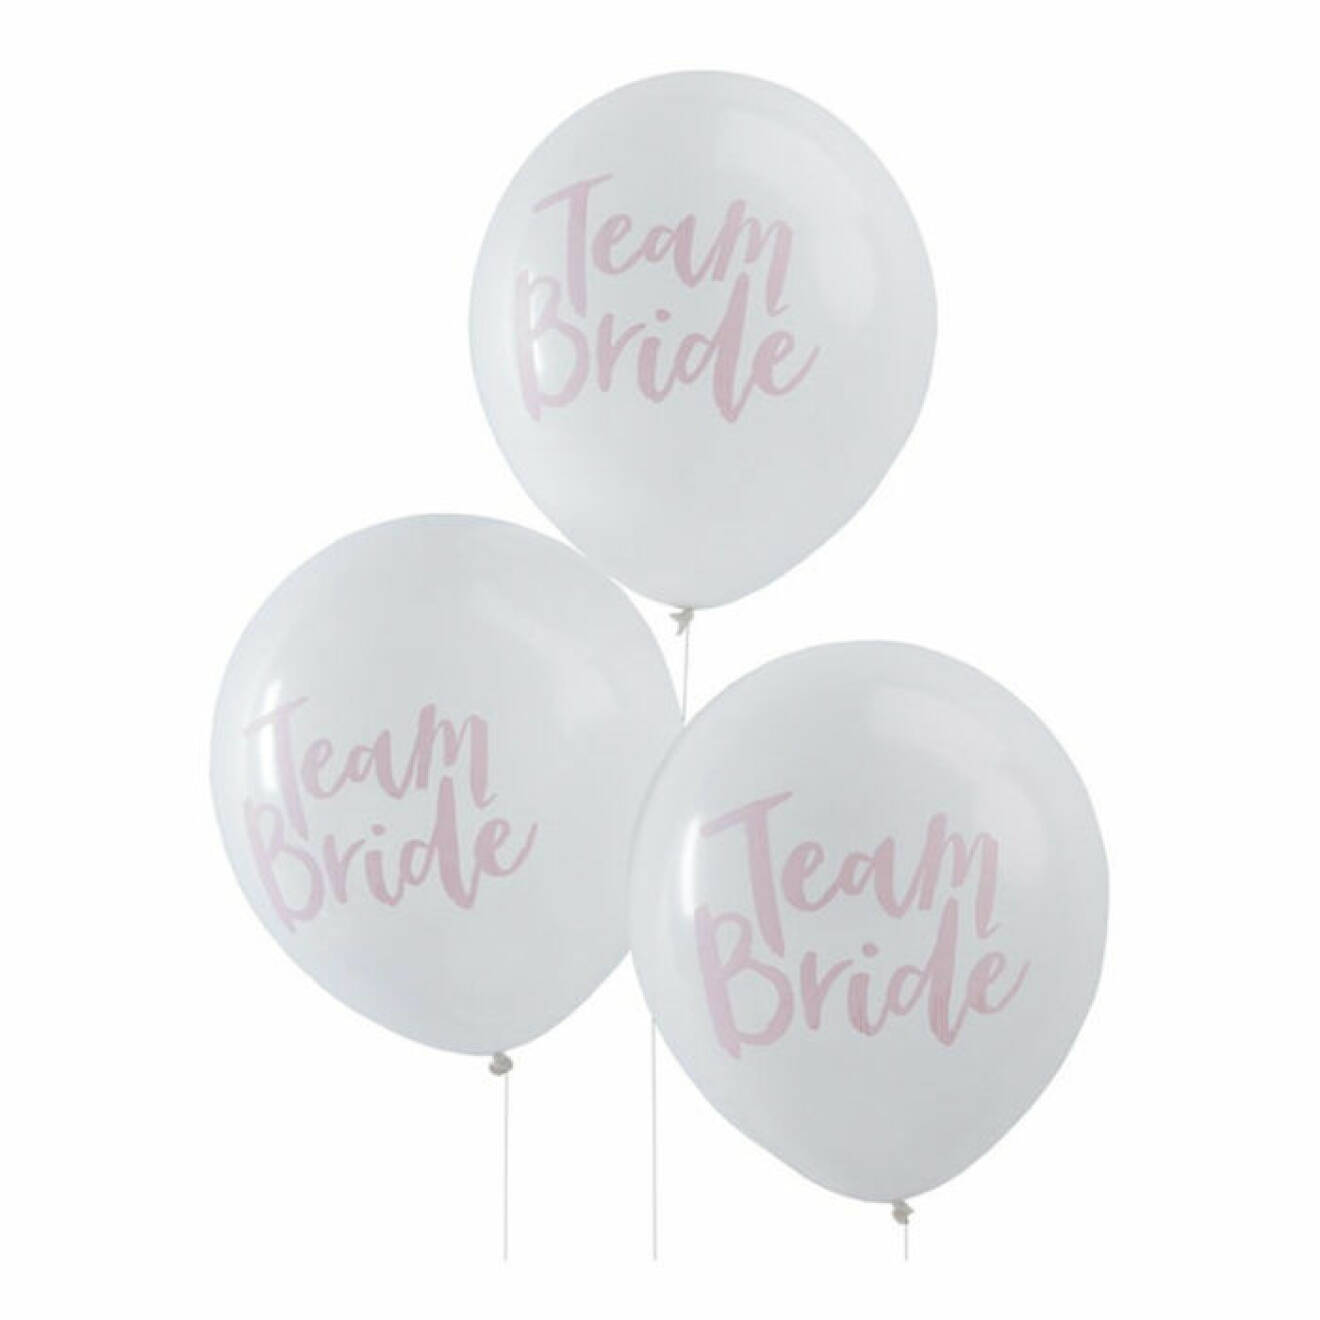 Vita ballonger med team bride